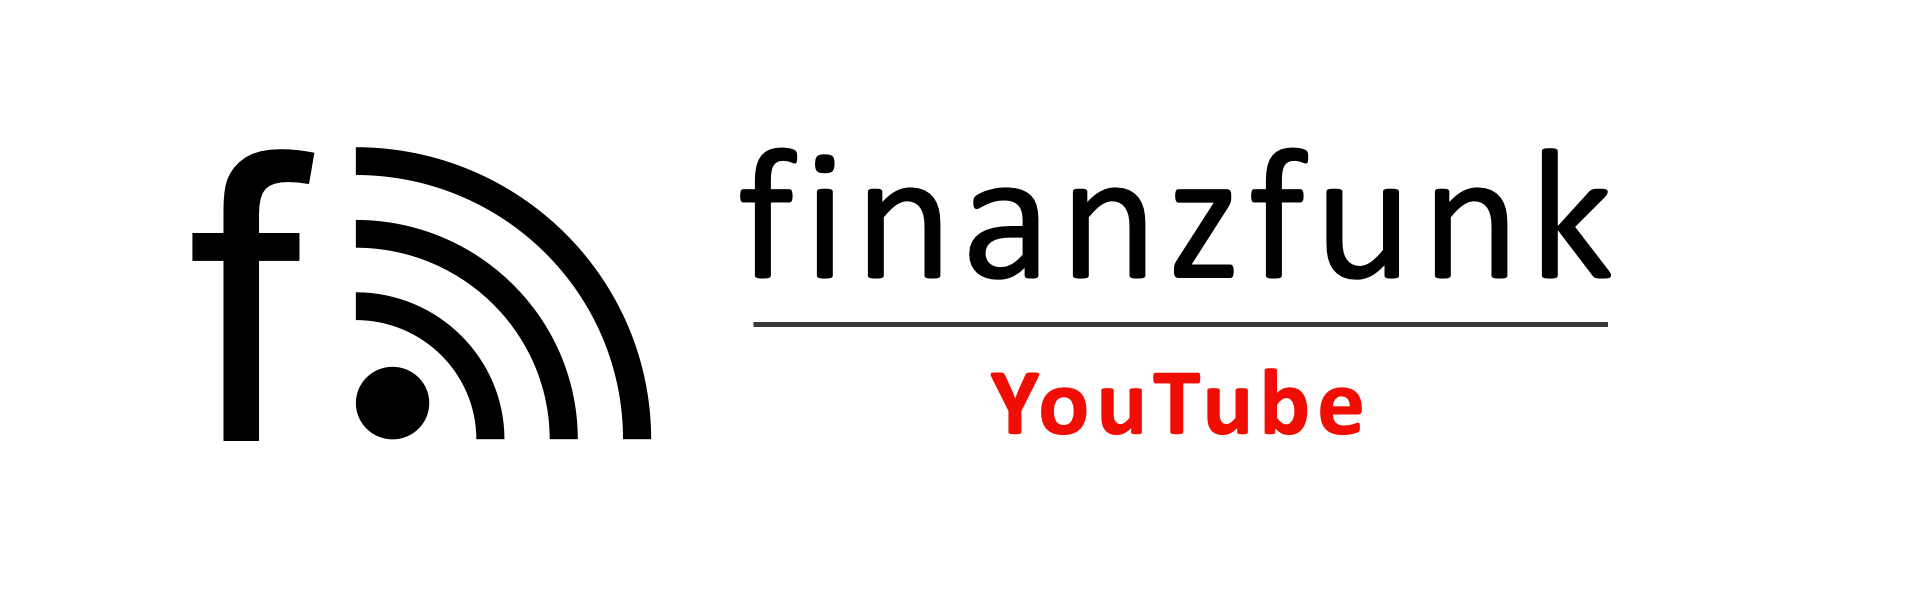 finanzfunk-YouTube-Logo-1